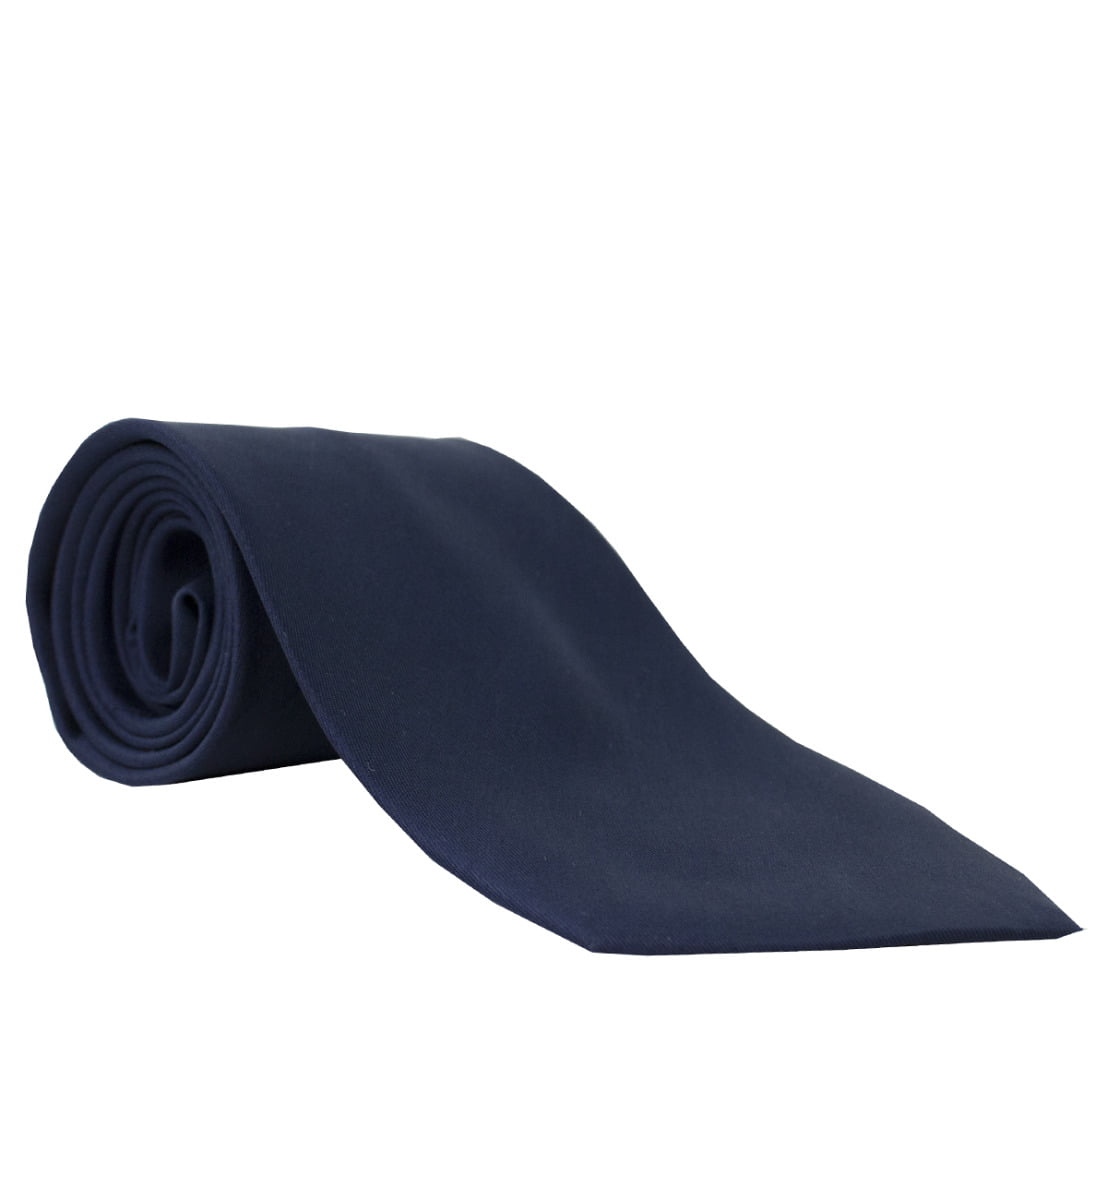 Cravatta uomo royal blu in seta tinta unita larghezza 8cm made in italy